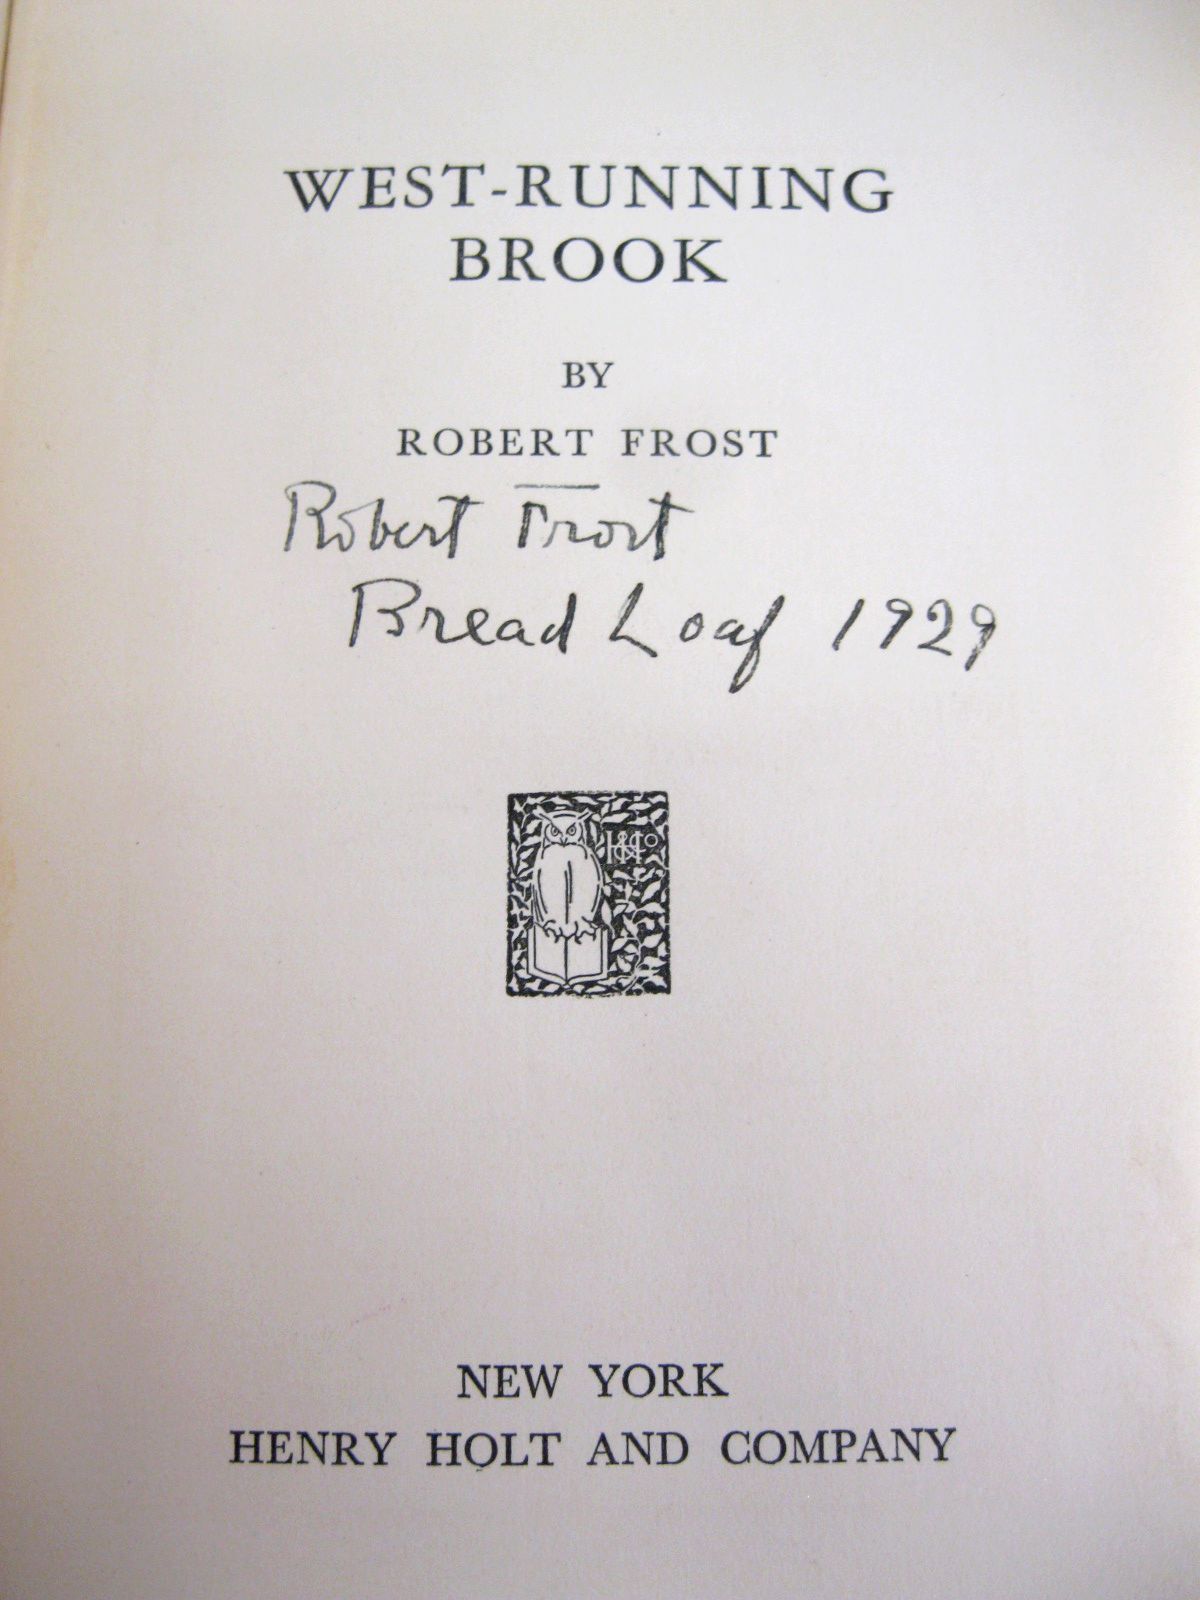 West-Running Brook by Robert Frost